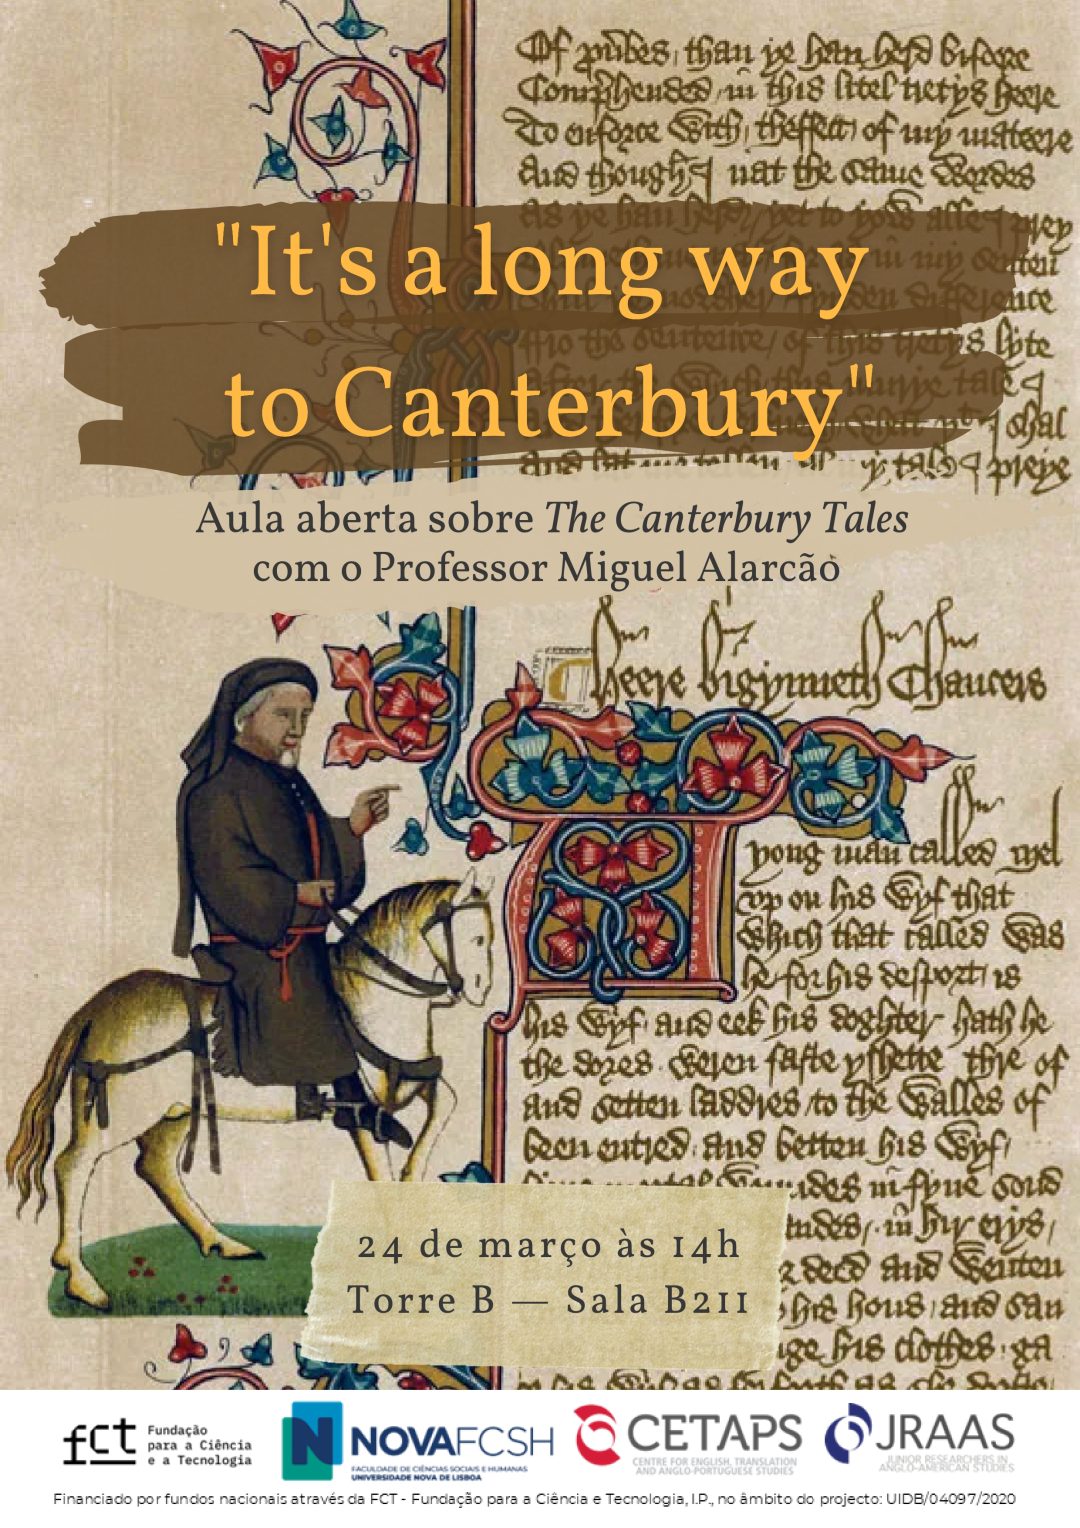 “It’s a long way to Canterbury”